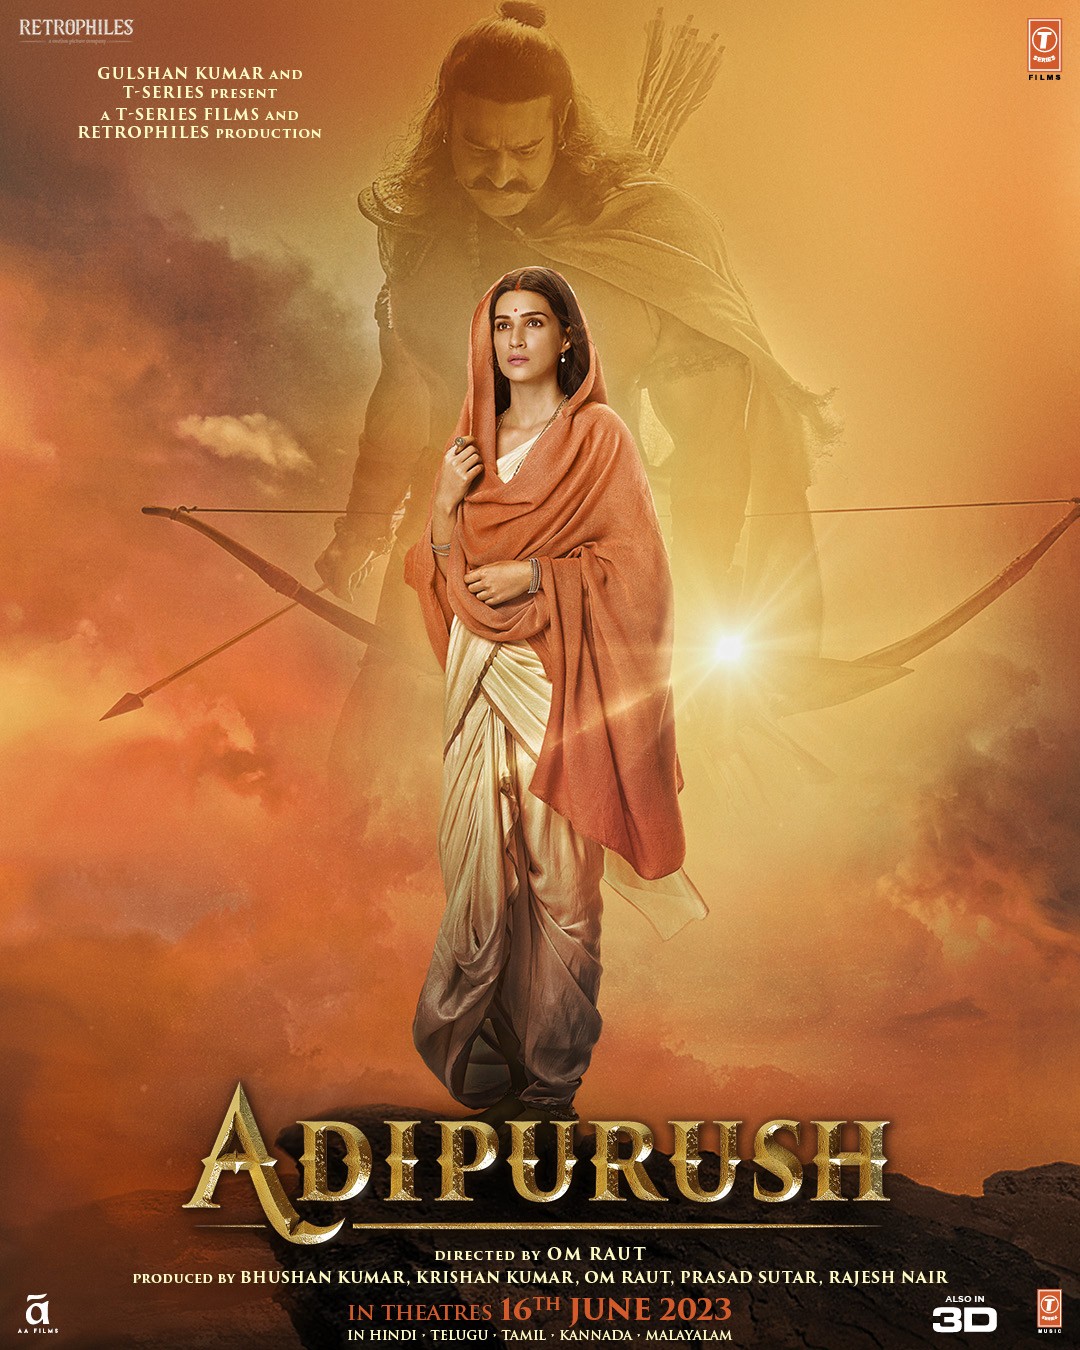 Adipurush Trailer 1 Trailers & Videos Rotten Tomatoes